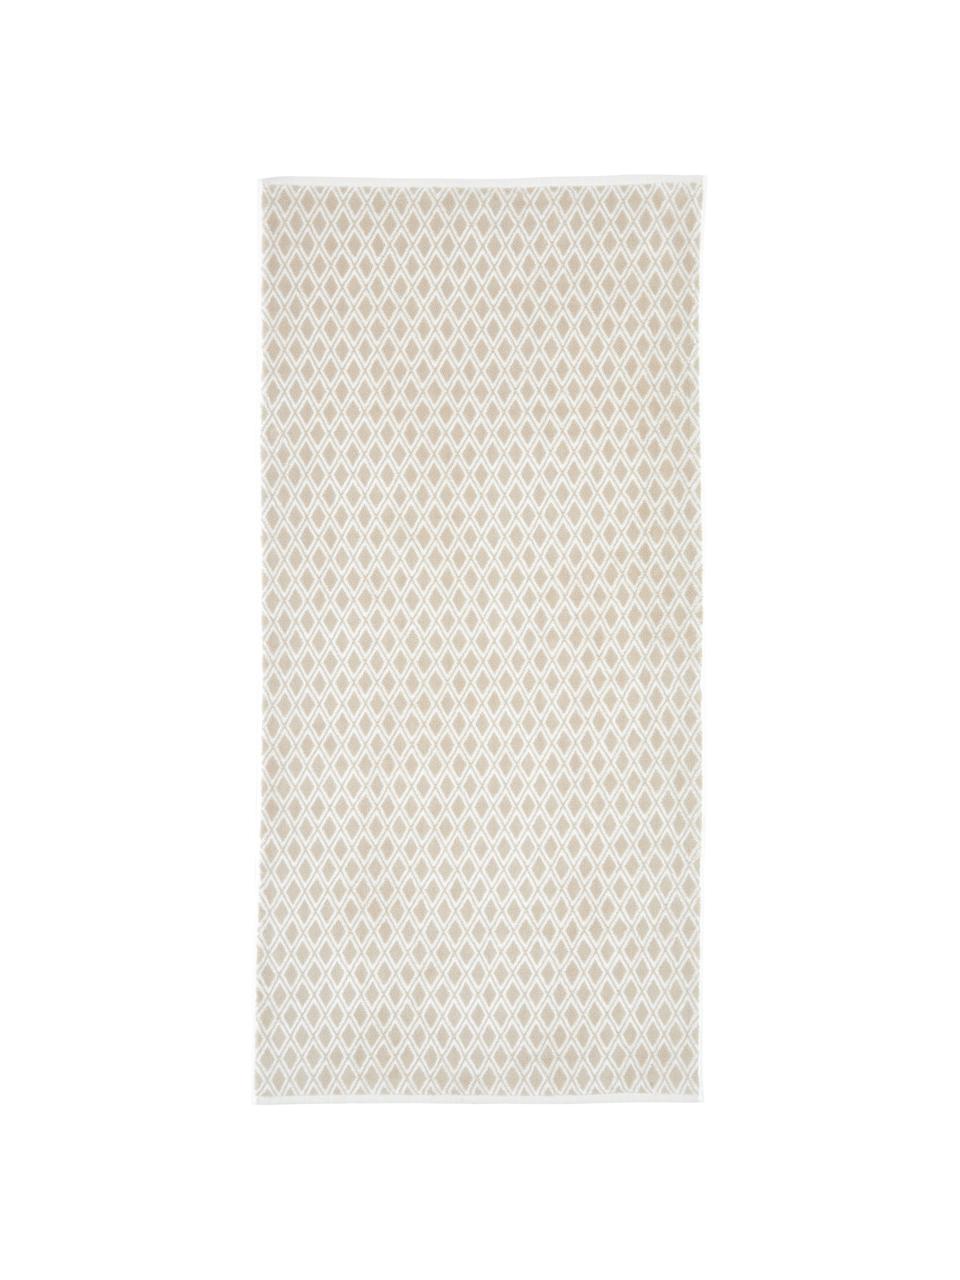 Set 3 asciugamani reversibili Ava, Sabbia, bianco crema, Set in varie misure